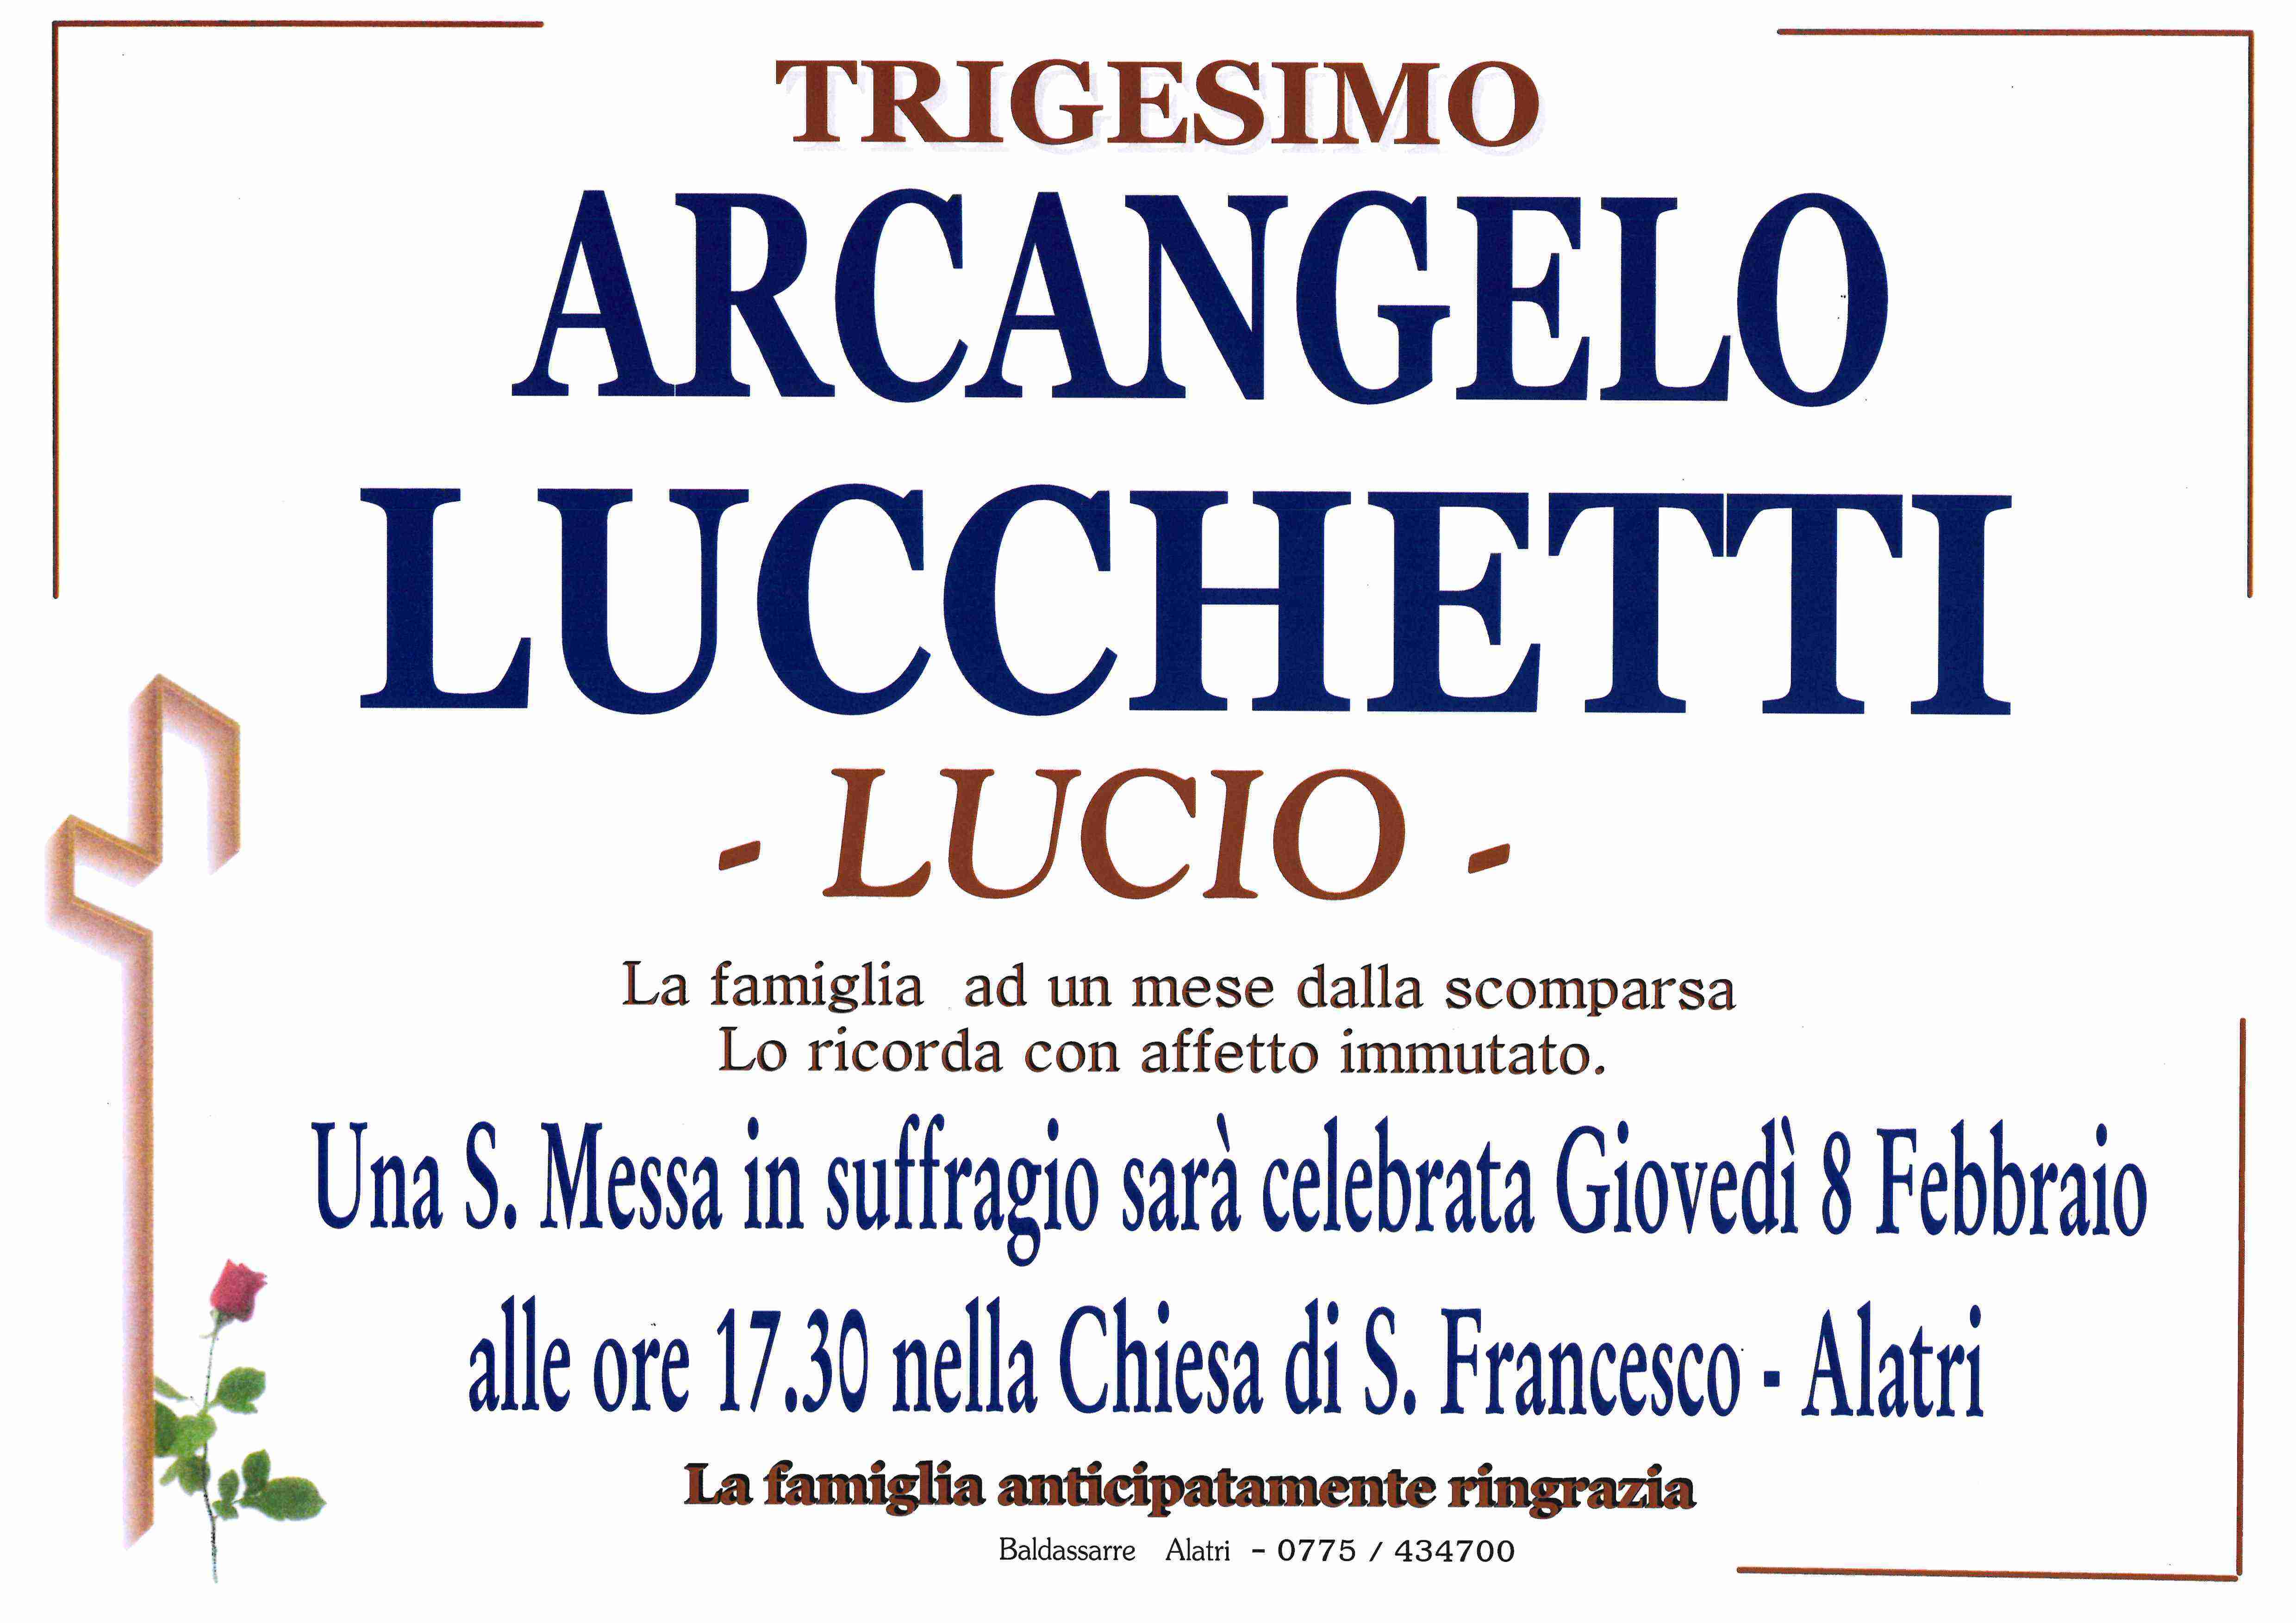 Arcangelo Lucchetti